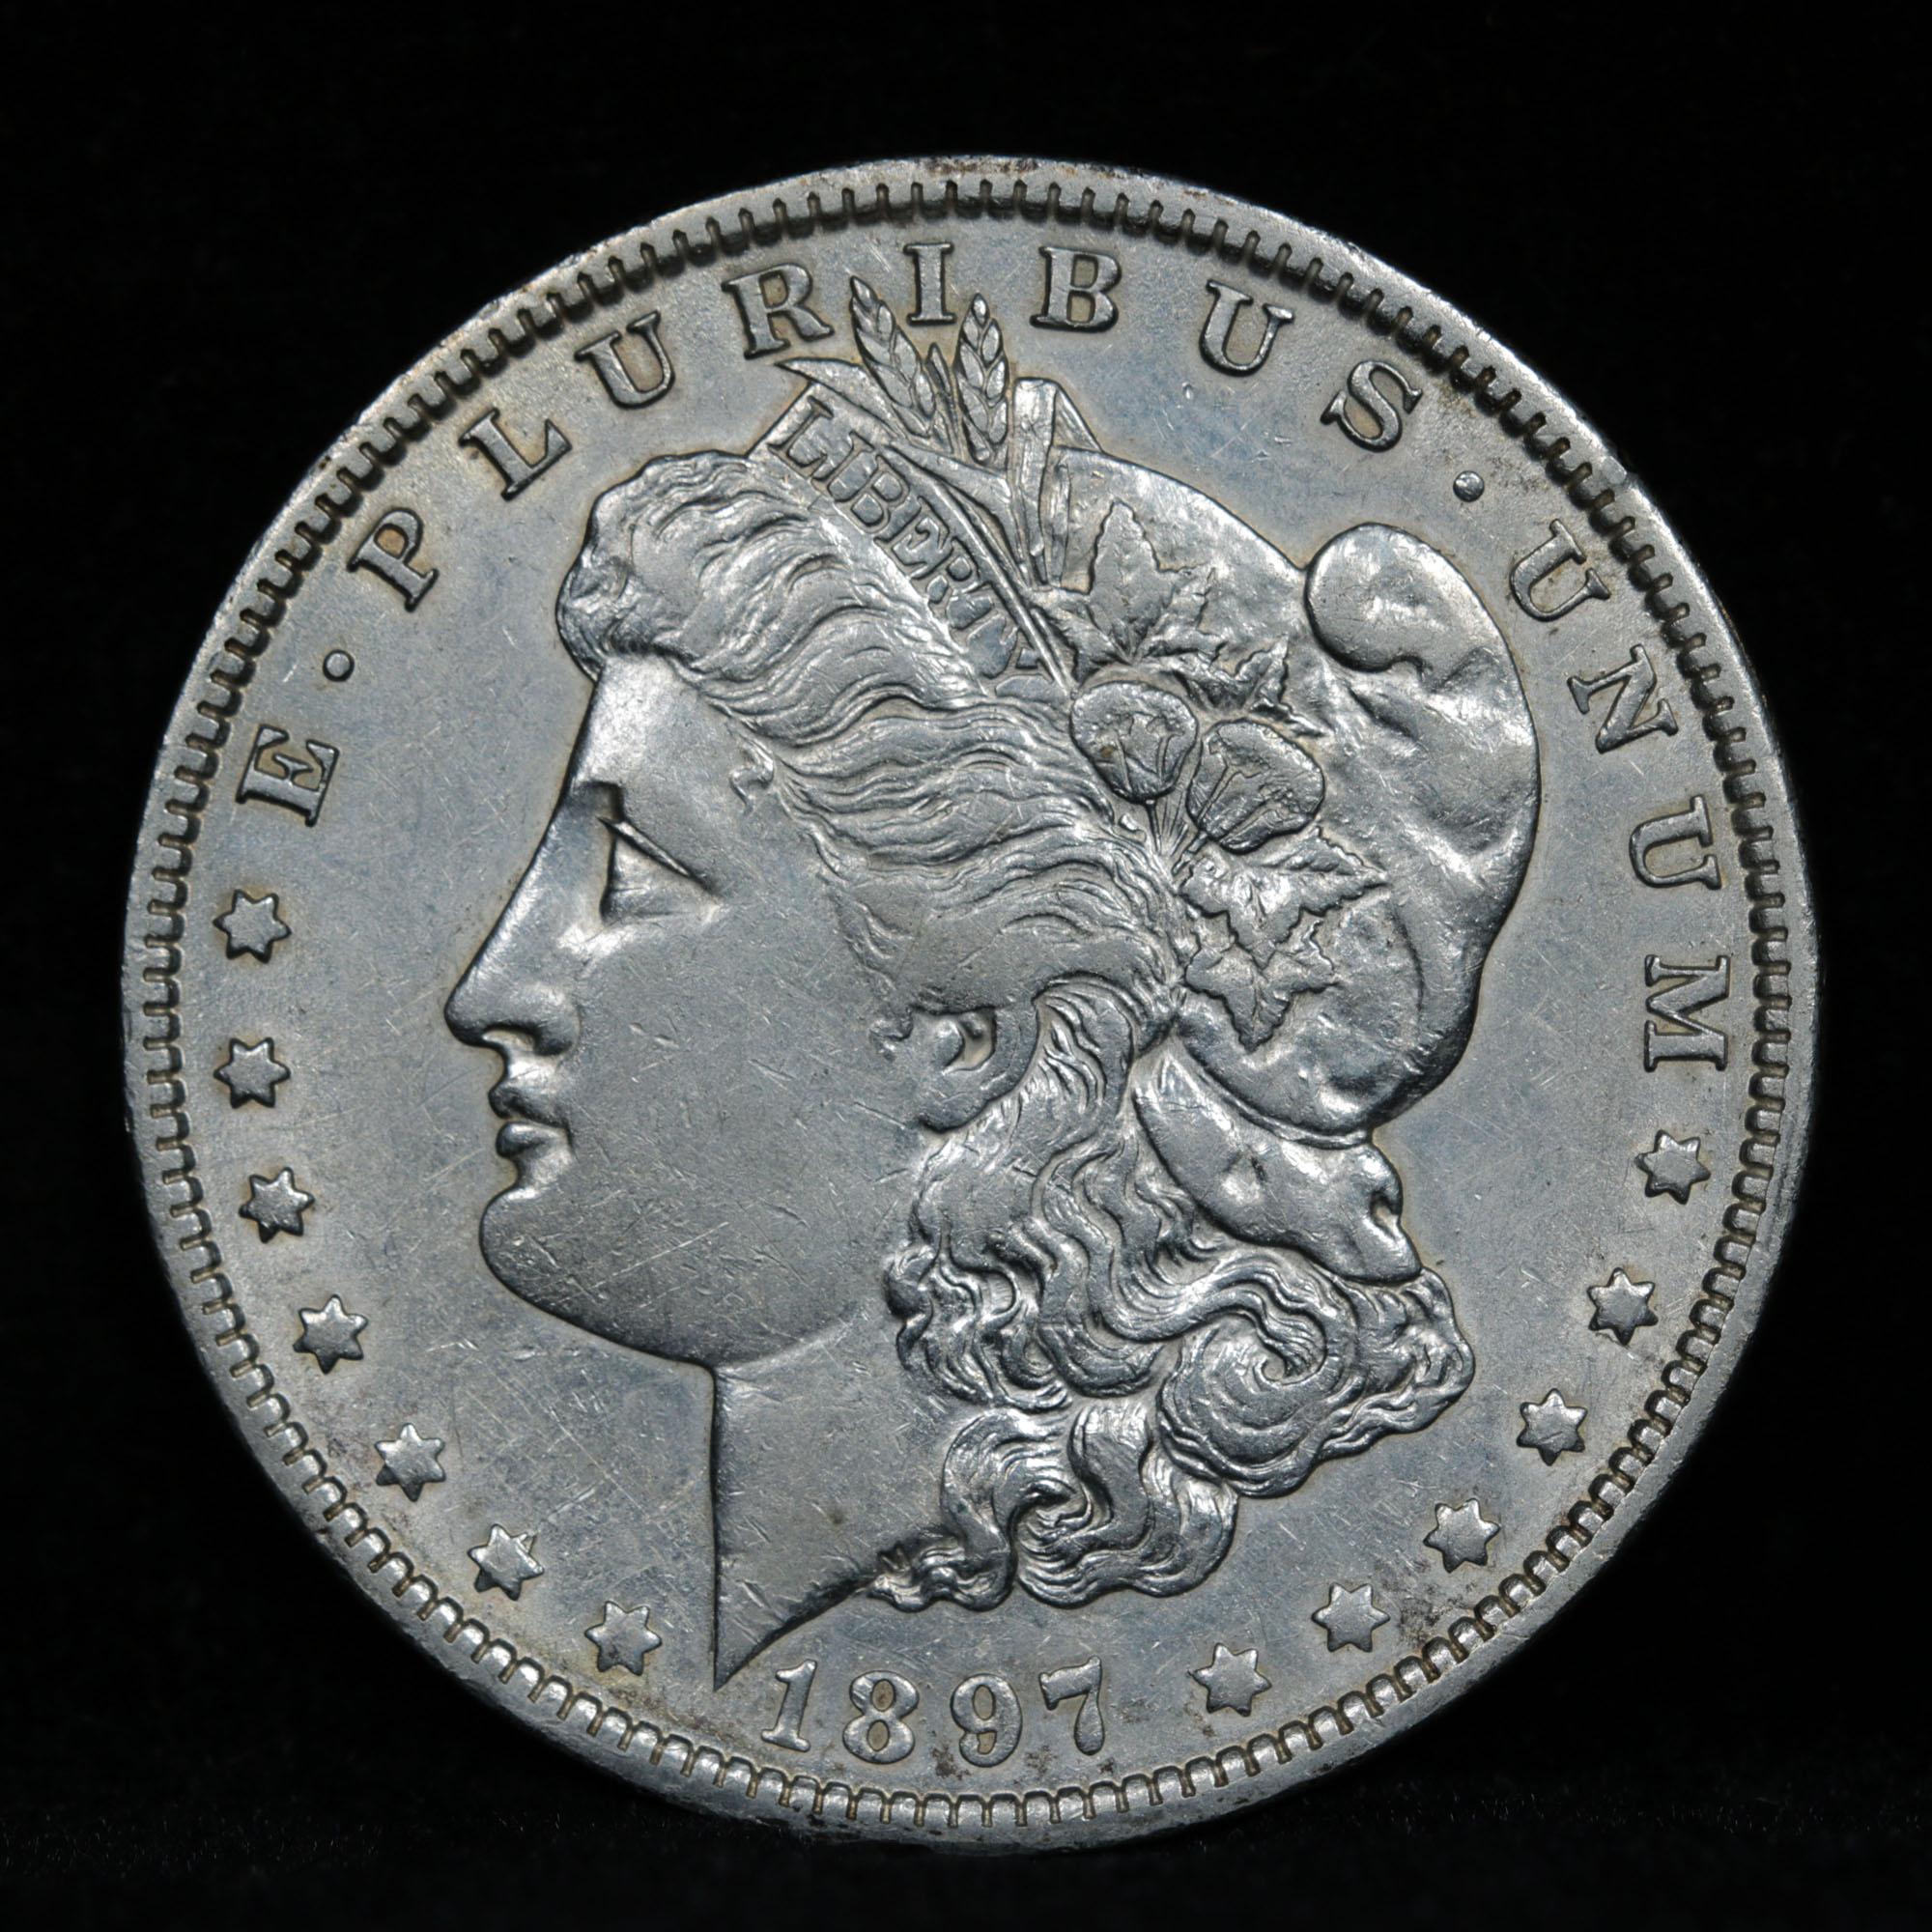 1897-o Morgan Dollar $1 Grades Select AU